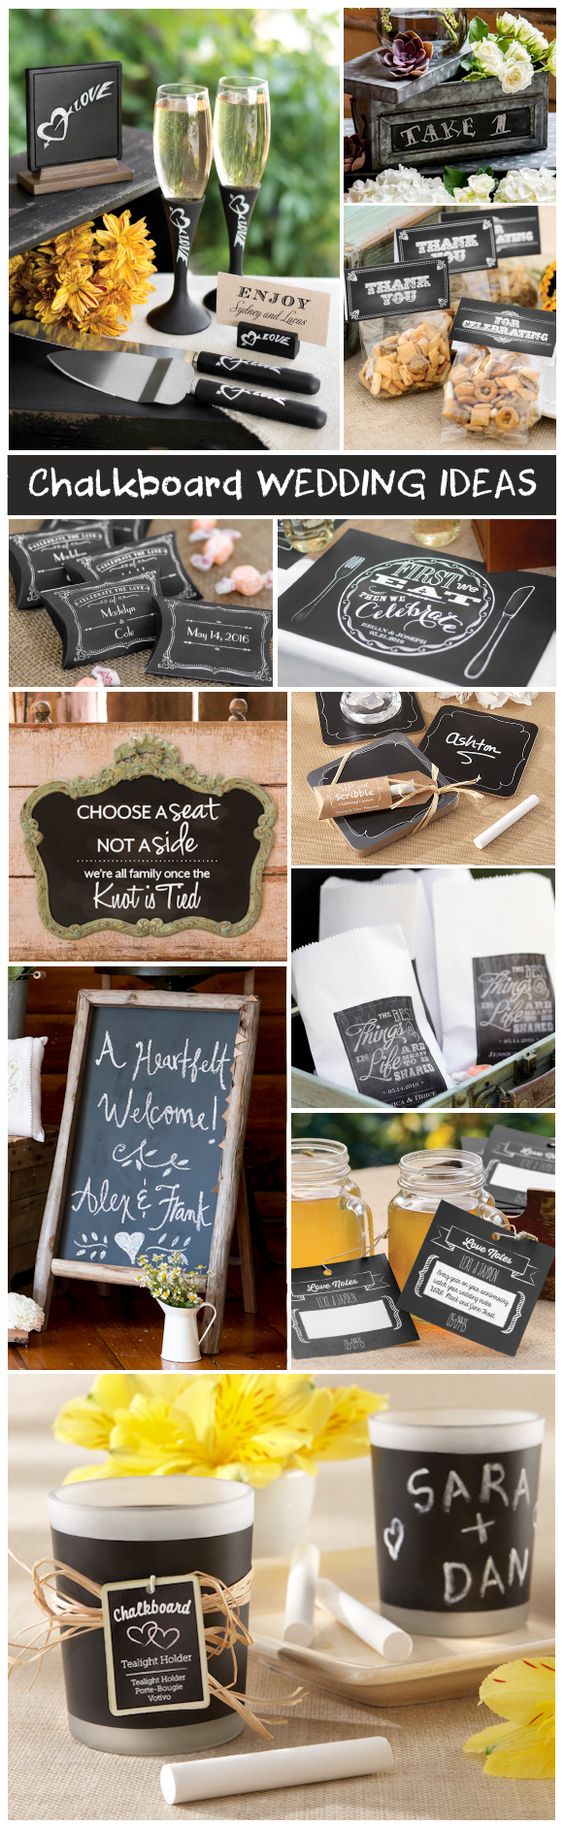 Chalkboard Wedding Decorations & Favor Ideas